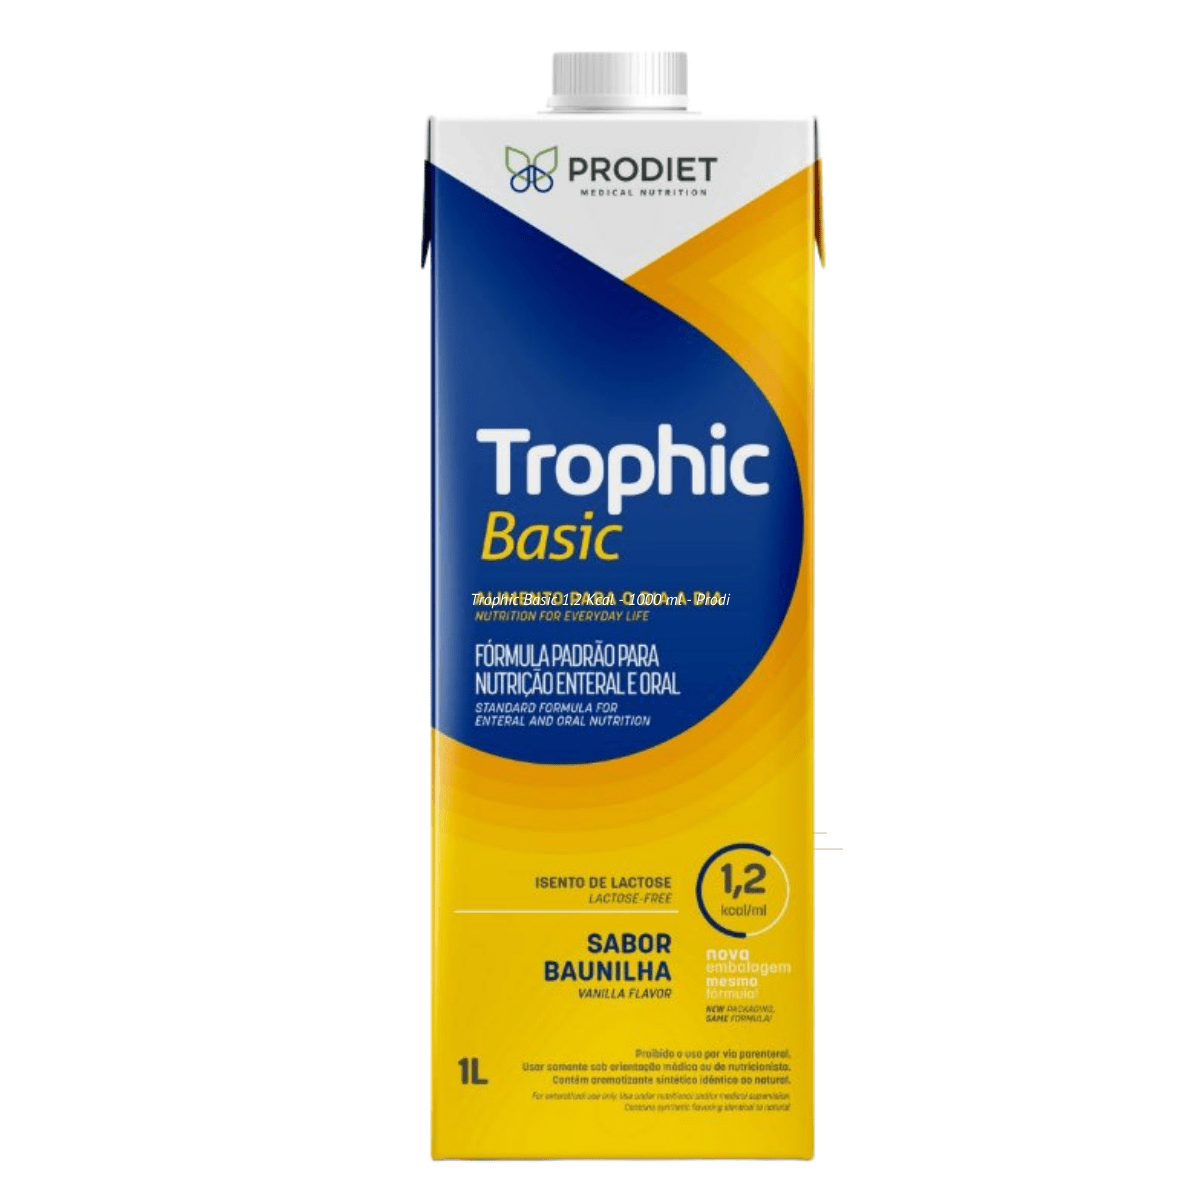 Trophic Basic 1.2 Kcal - 1000 ml - Prodiet